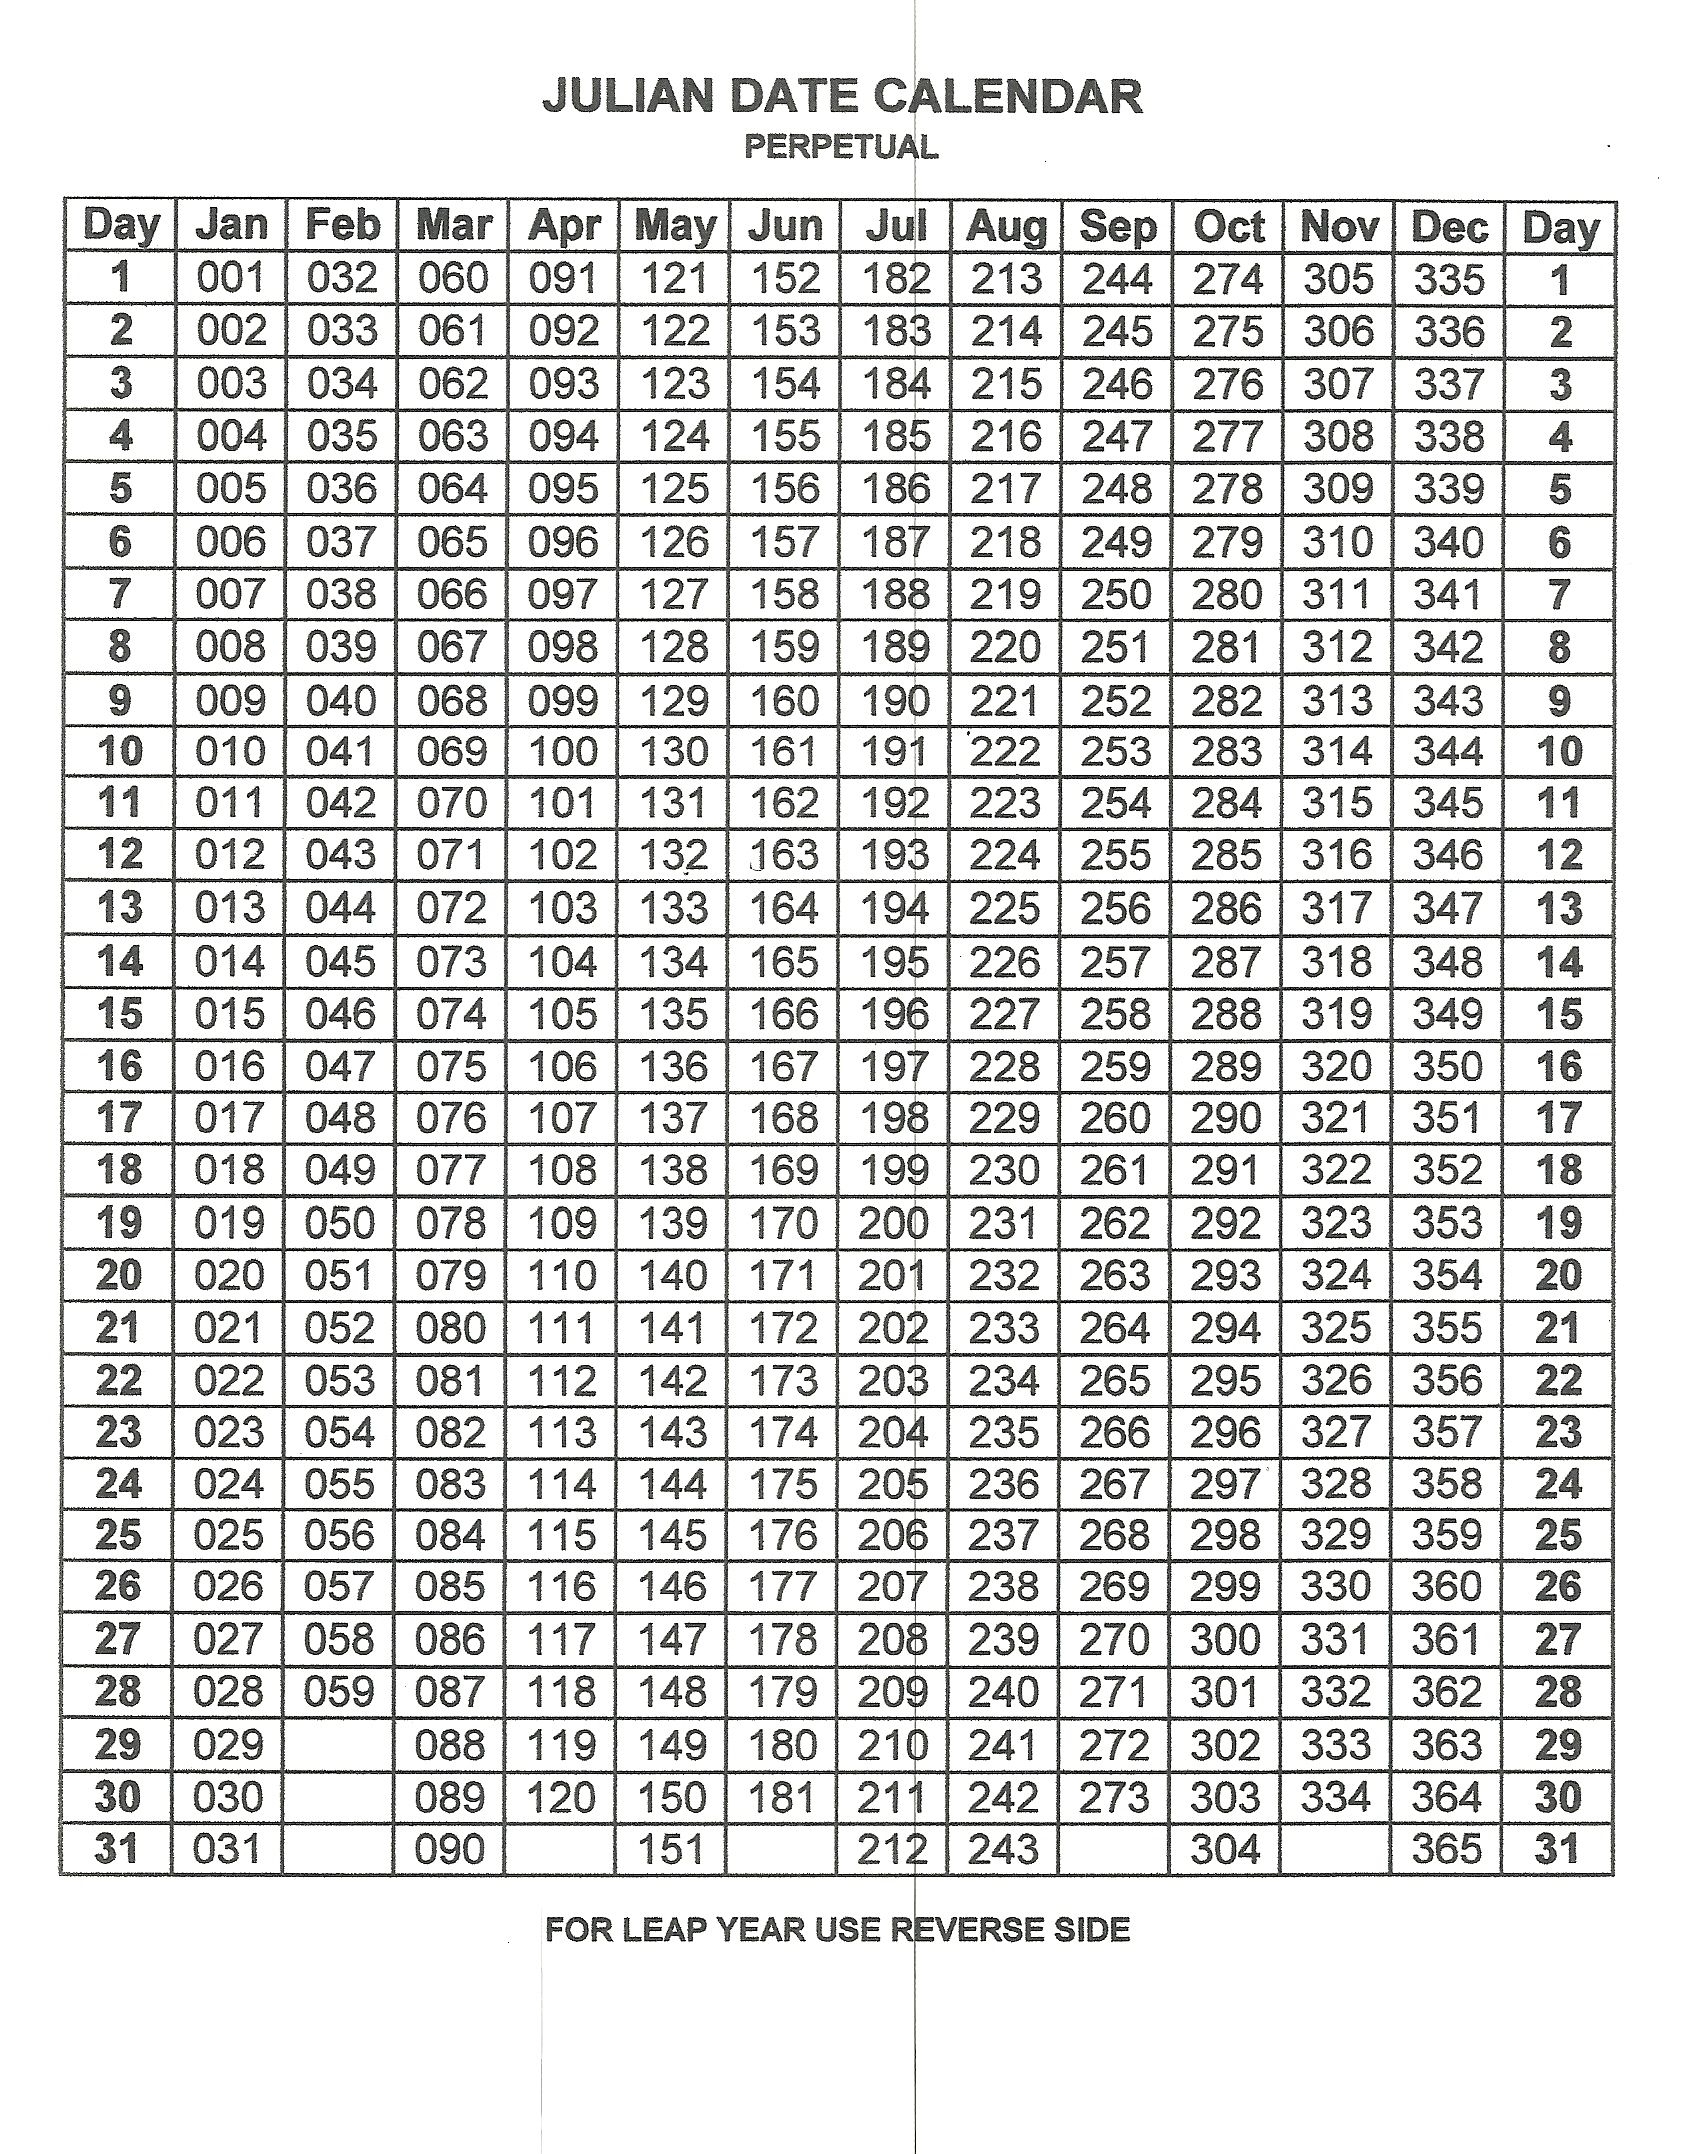 2020 Yearly Calendar With Julian Dates - Calendar